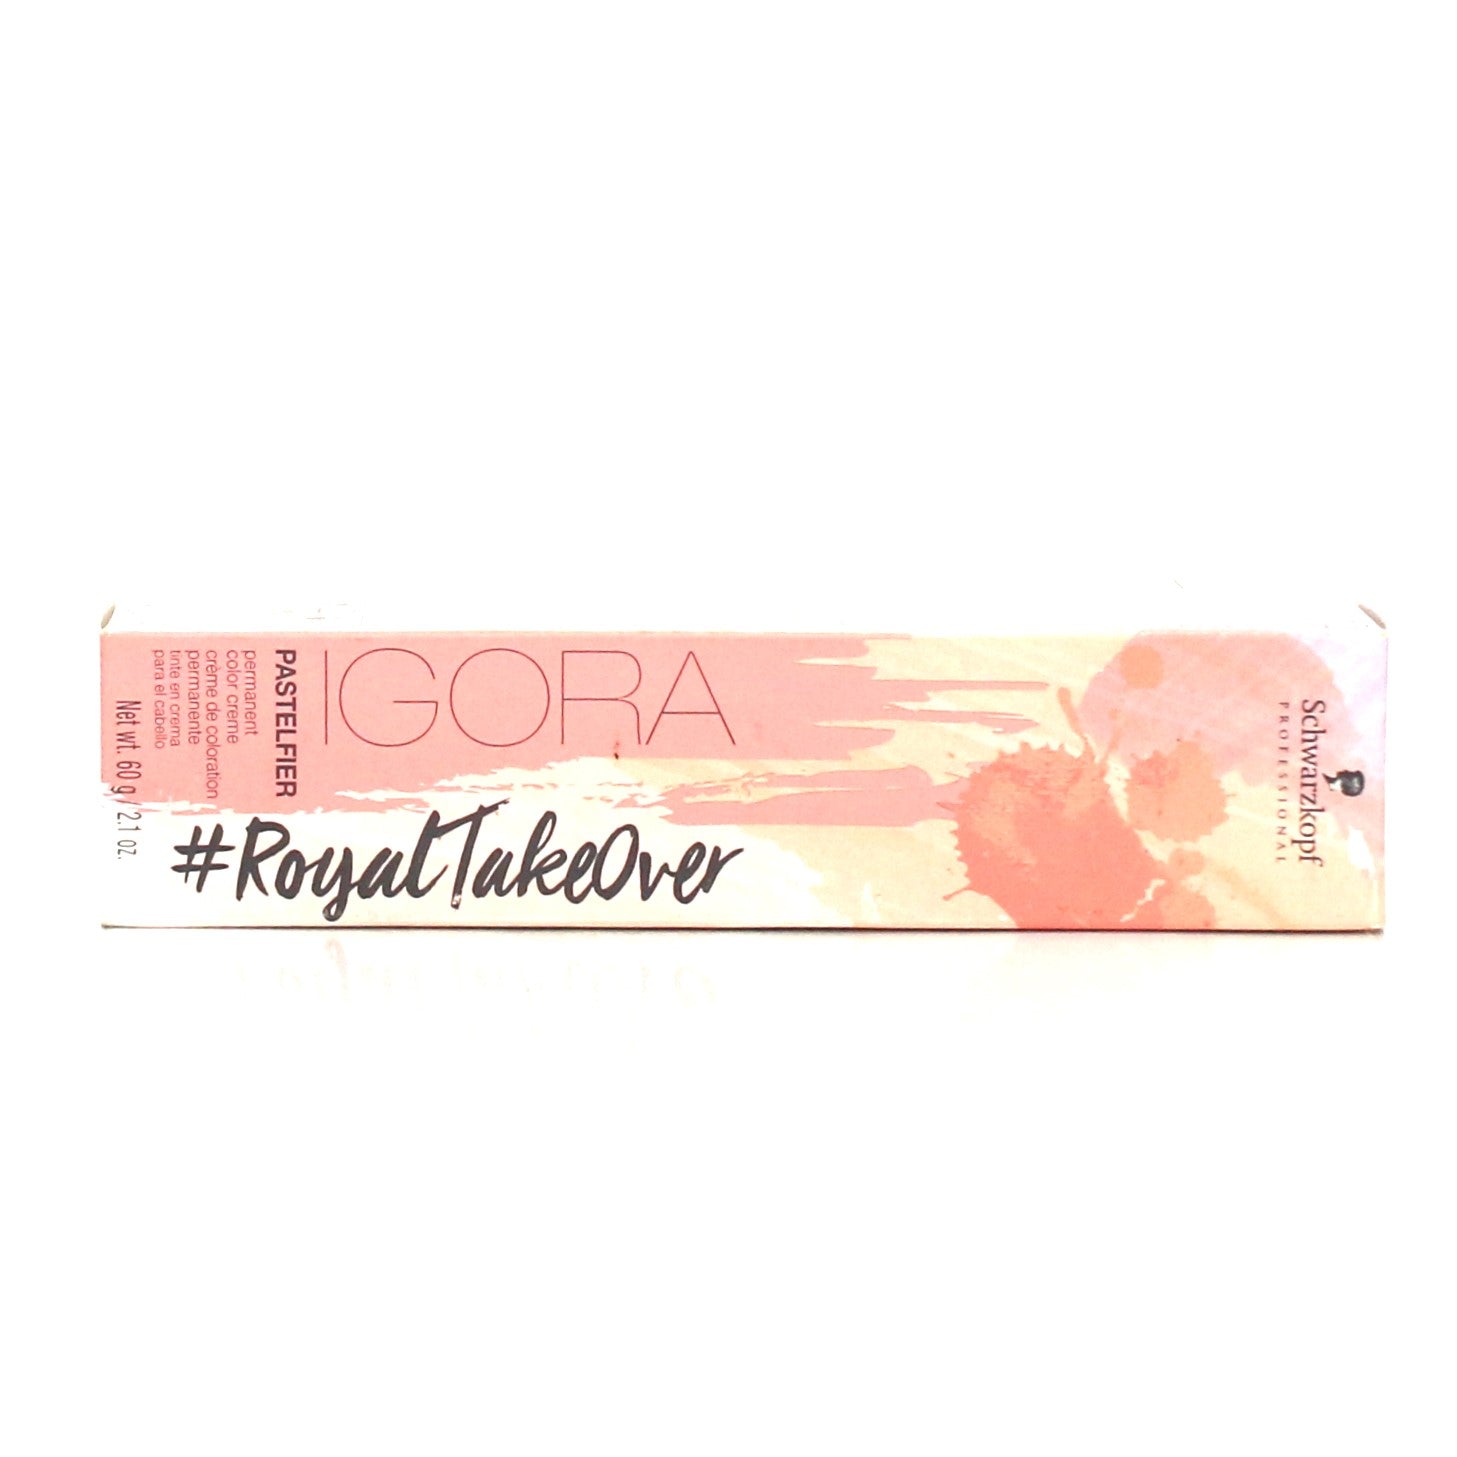 SCHWARZKOPF Igora Royal Takeover Pastelfier Permanent Color Creme 2.1 oz